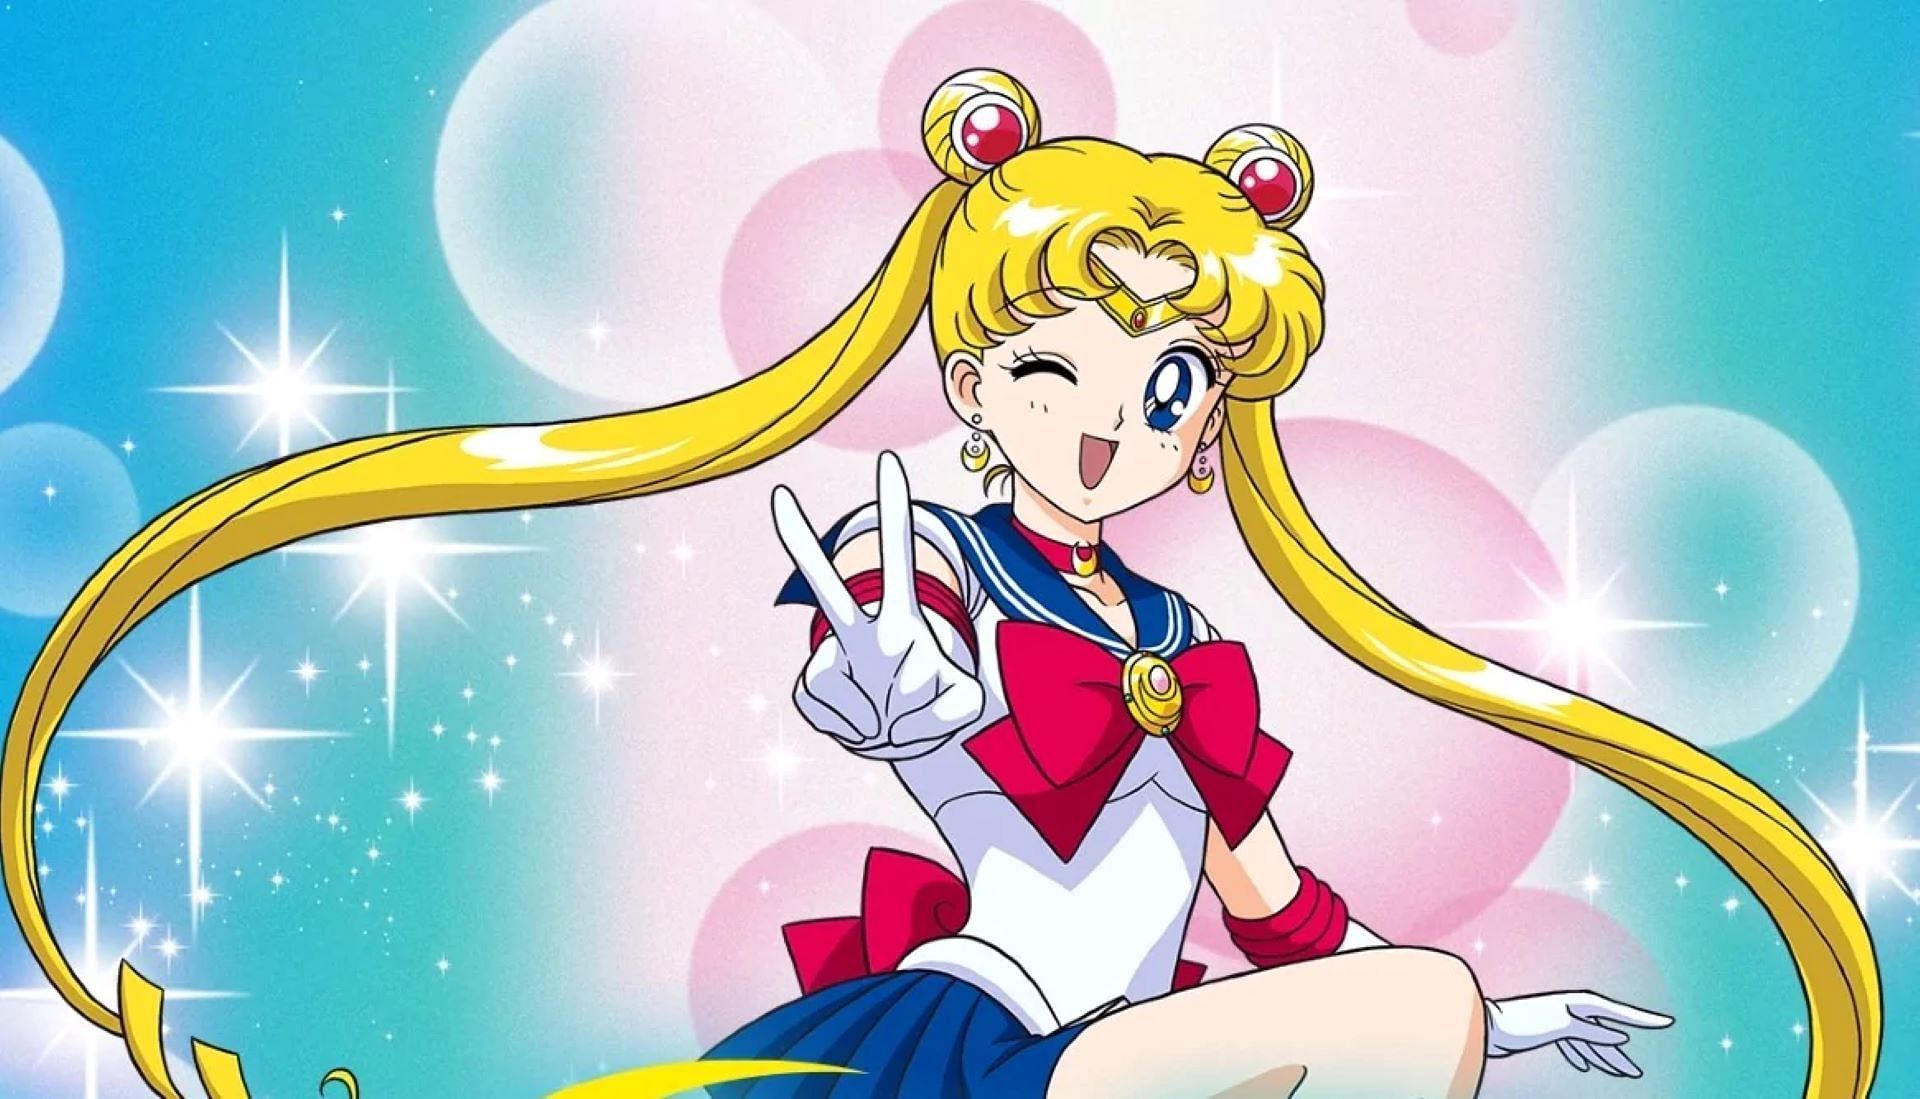 Sailor Moon as seen in the anime series (Image via Toei Animation)